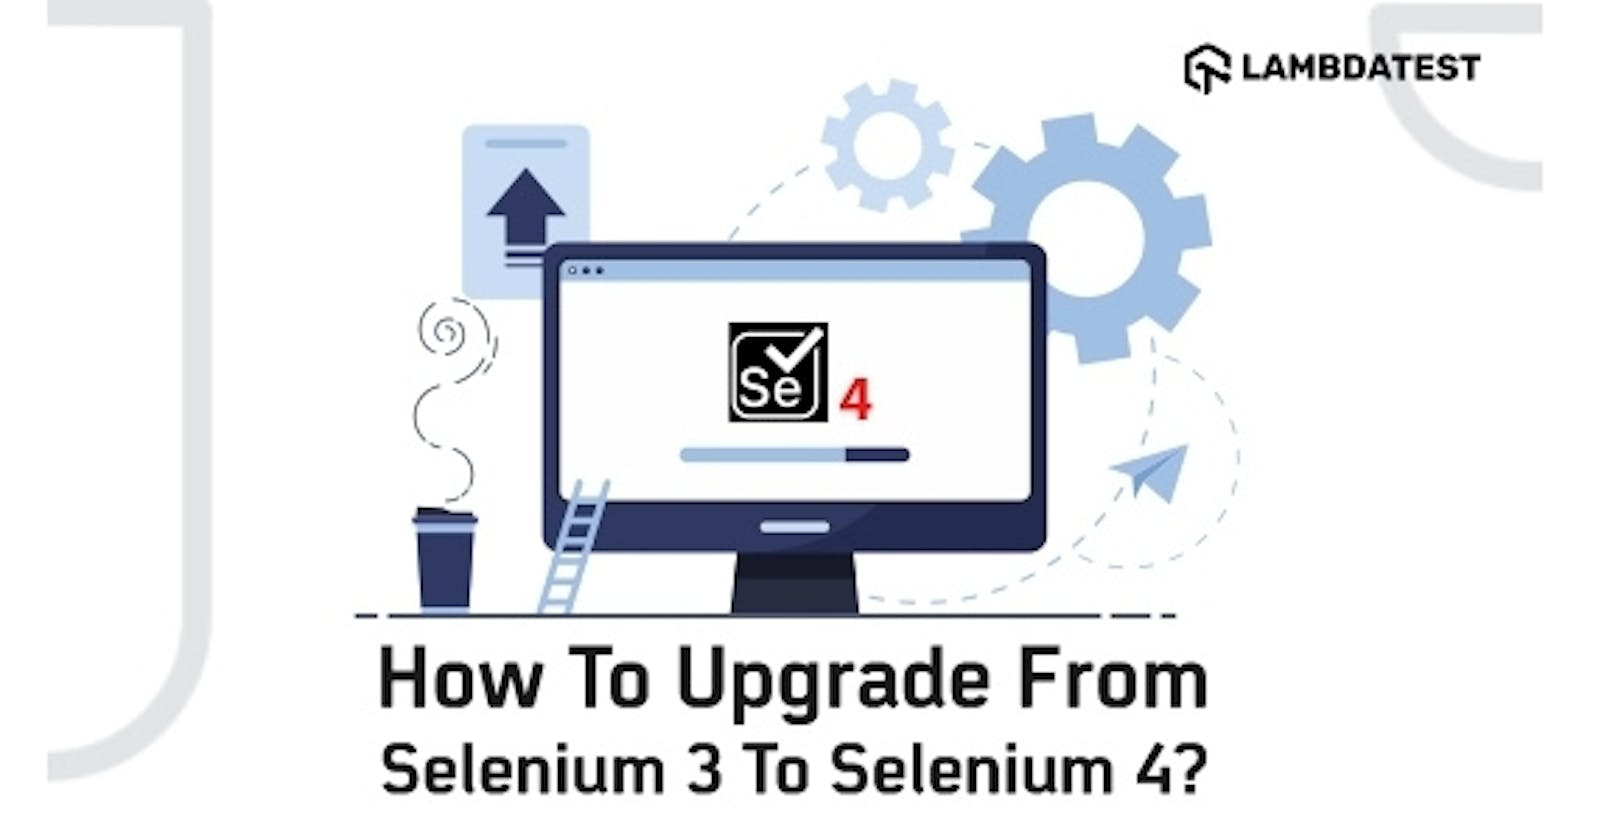 How To Upgrade From Selenium 3 To Selenium 4?